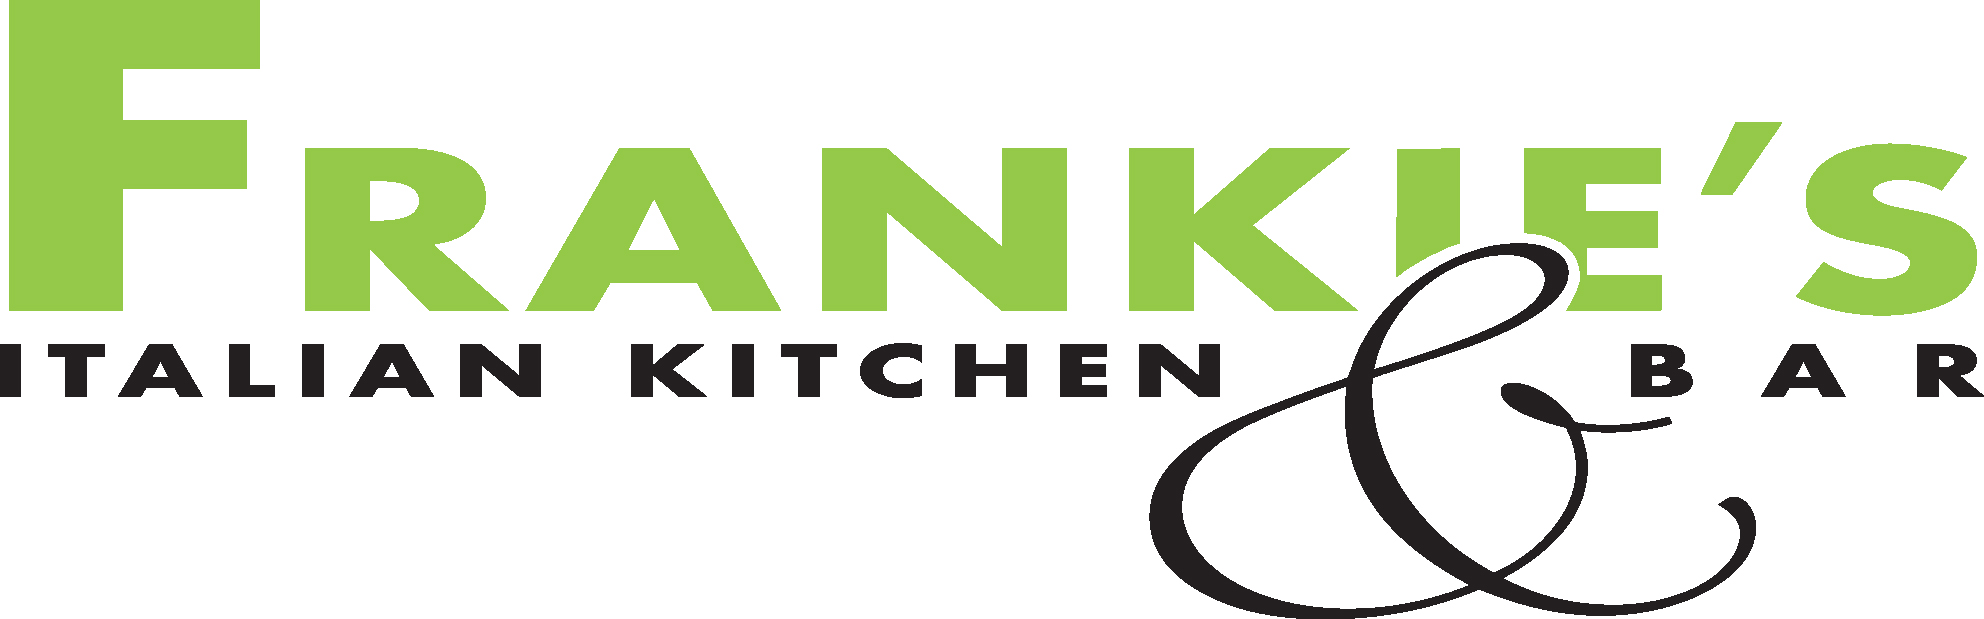 Frankie's Italian Kitchen & Bar